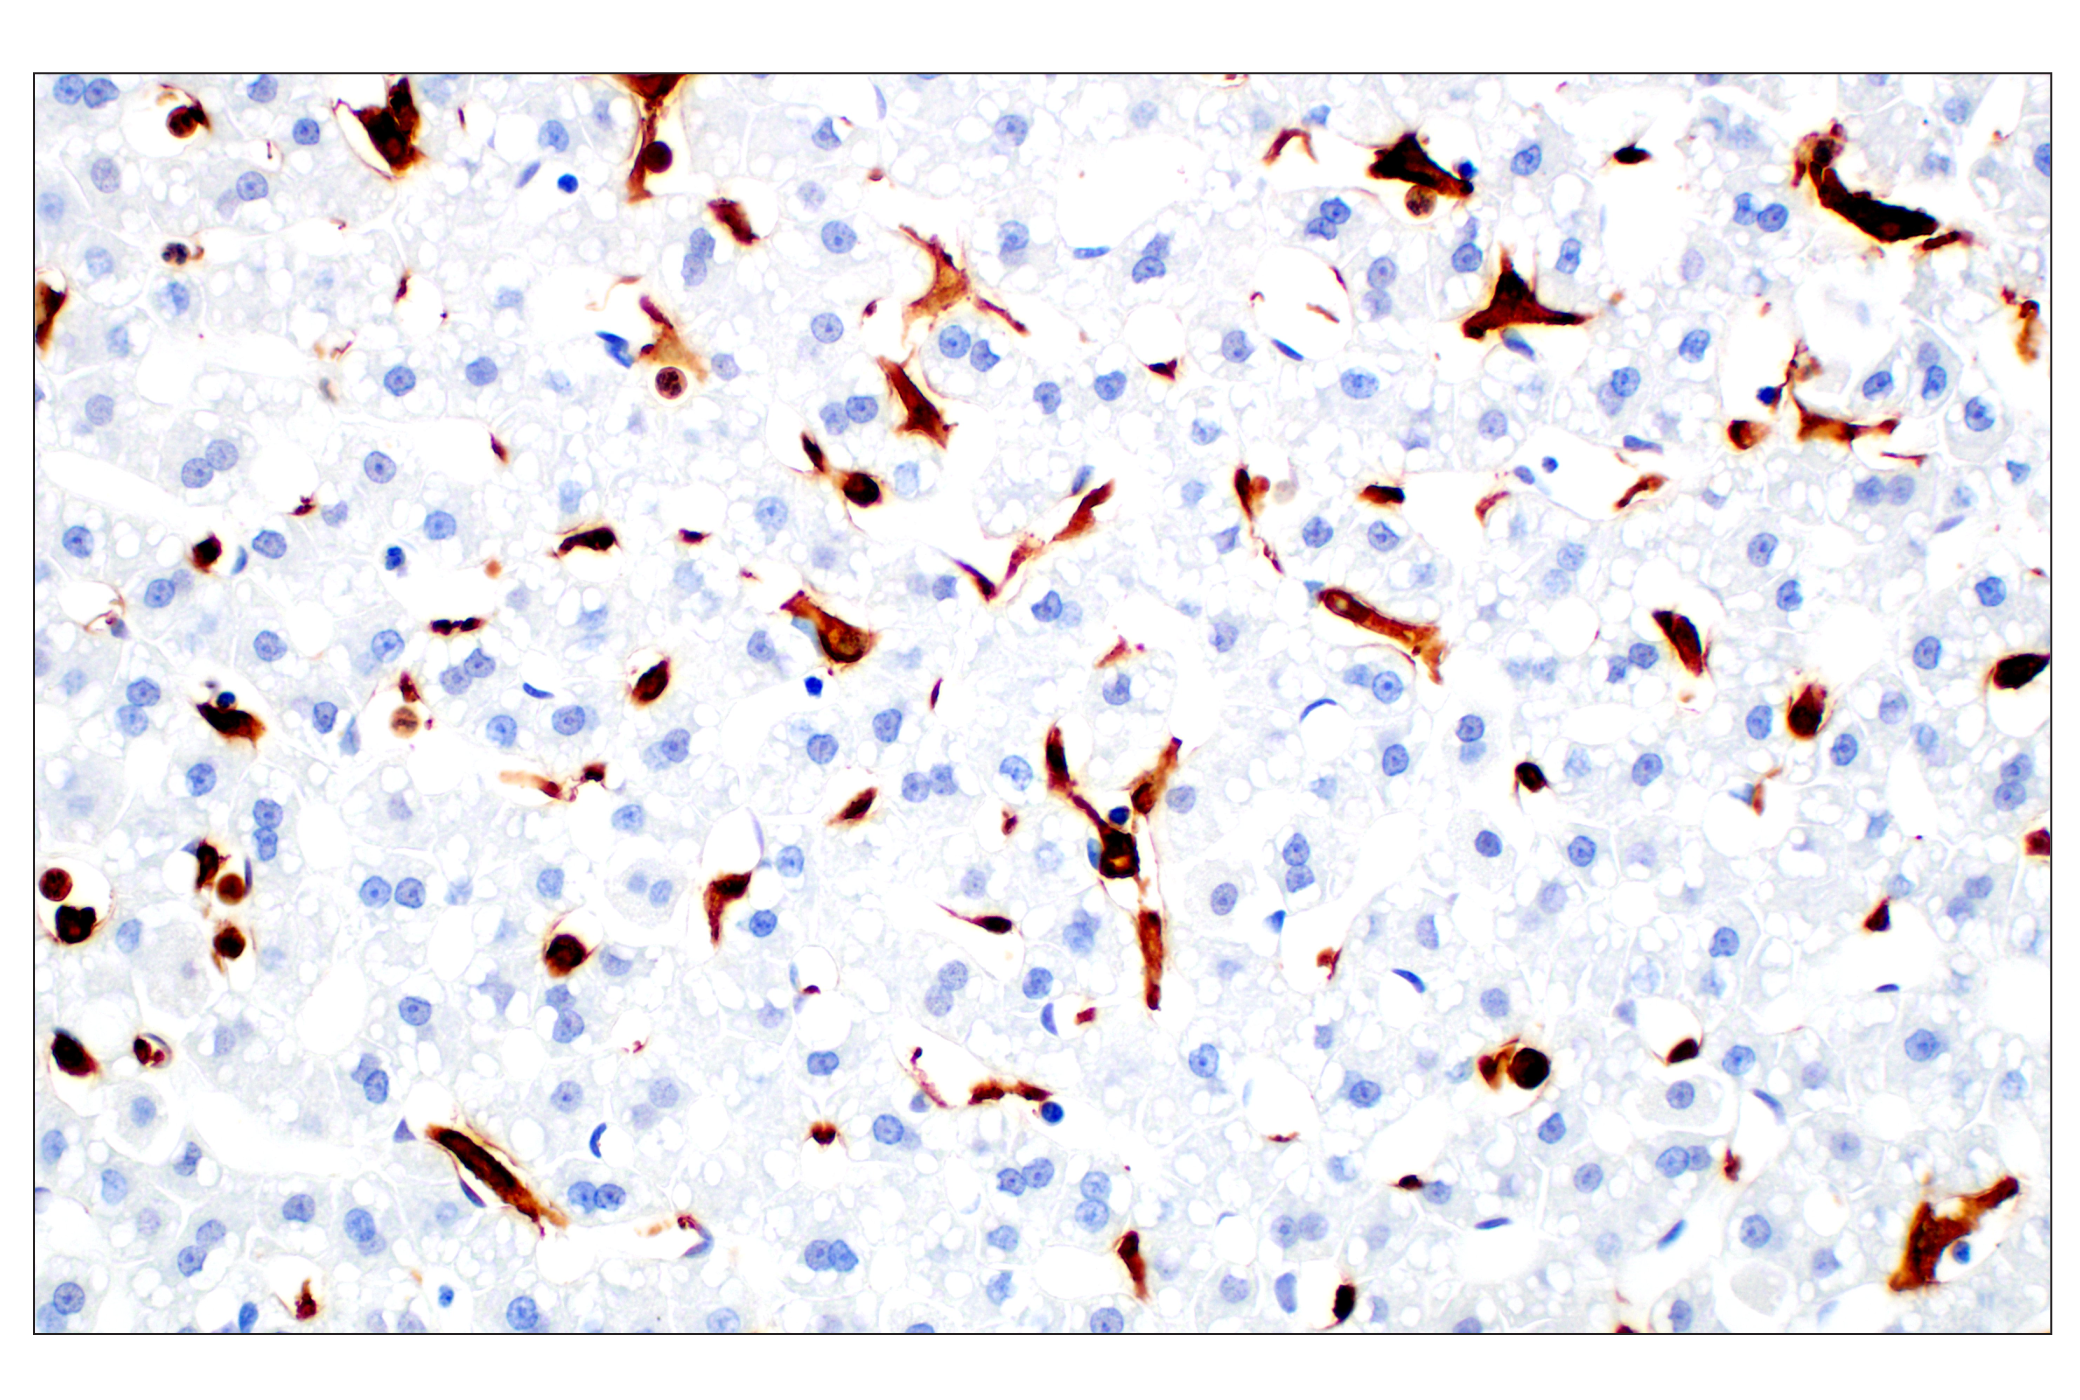  Image 74: Mouse Reactive M1 vs M2 Macrophage IHC Antibody Sampler Kit